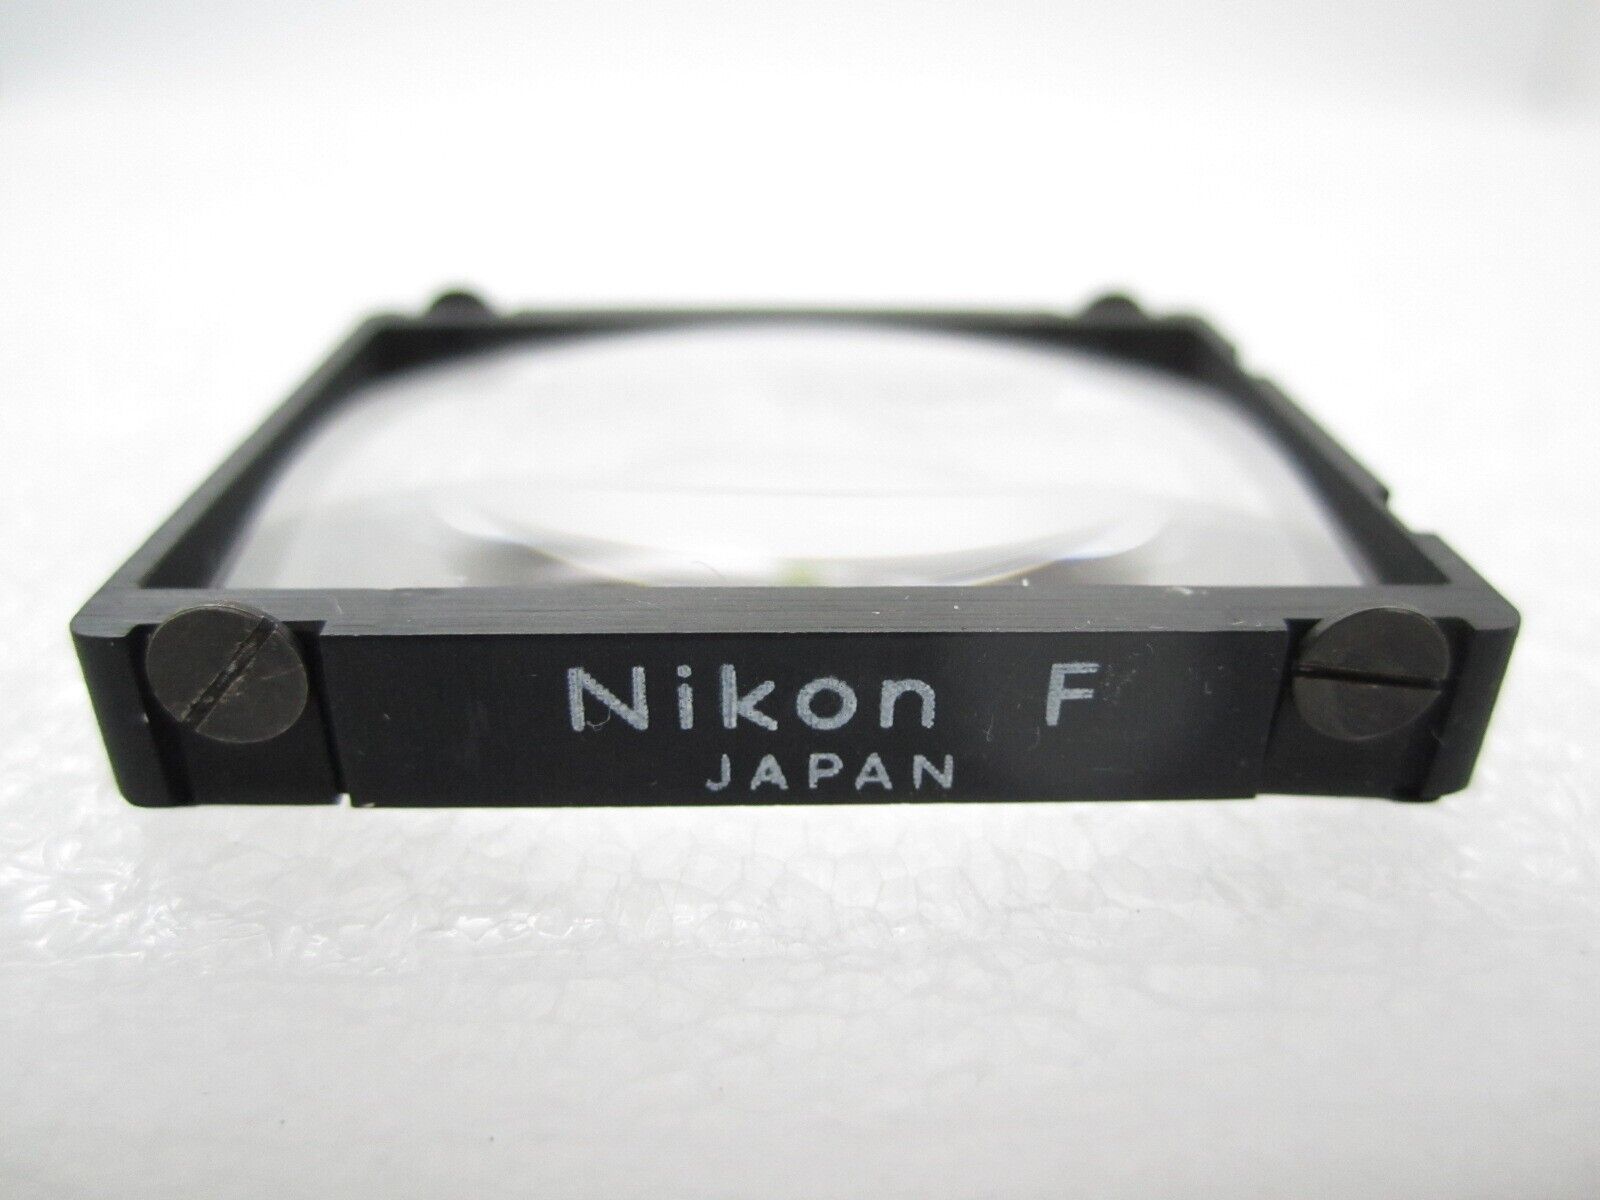 Vintage Nikon F2 Focusing Lens Type G2 (Made in Japan)